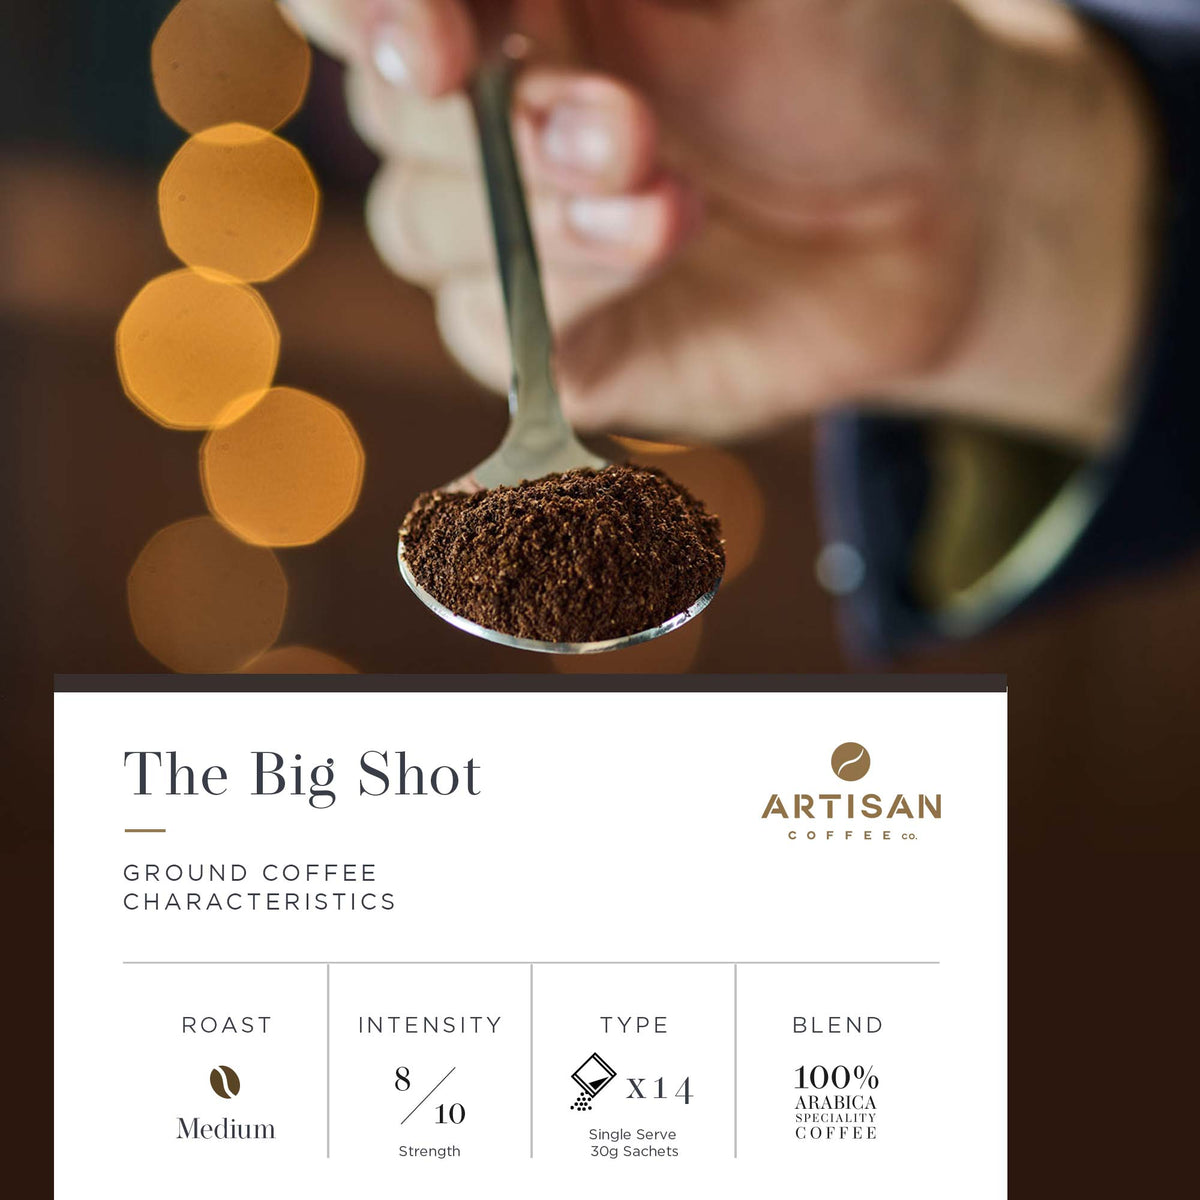 Artisan Coffee Co The Big Shot ground coffee Infographic characteristics